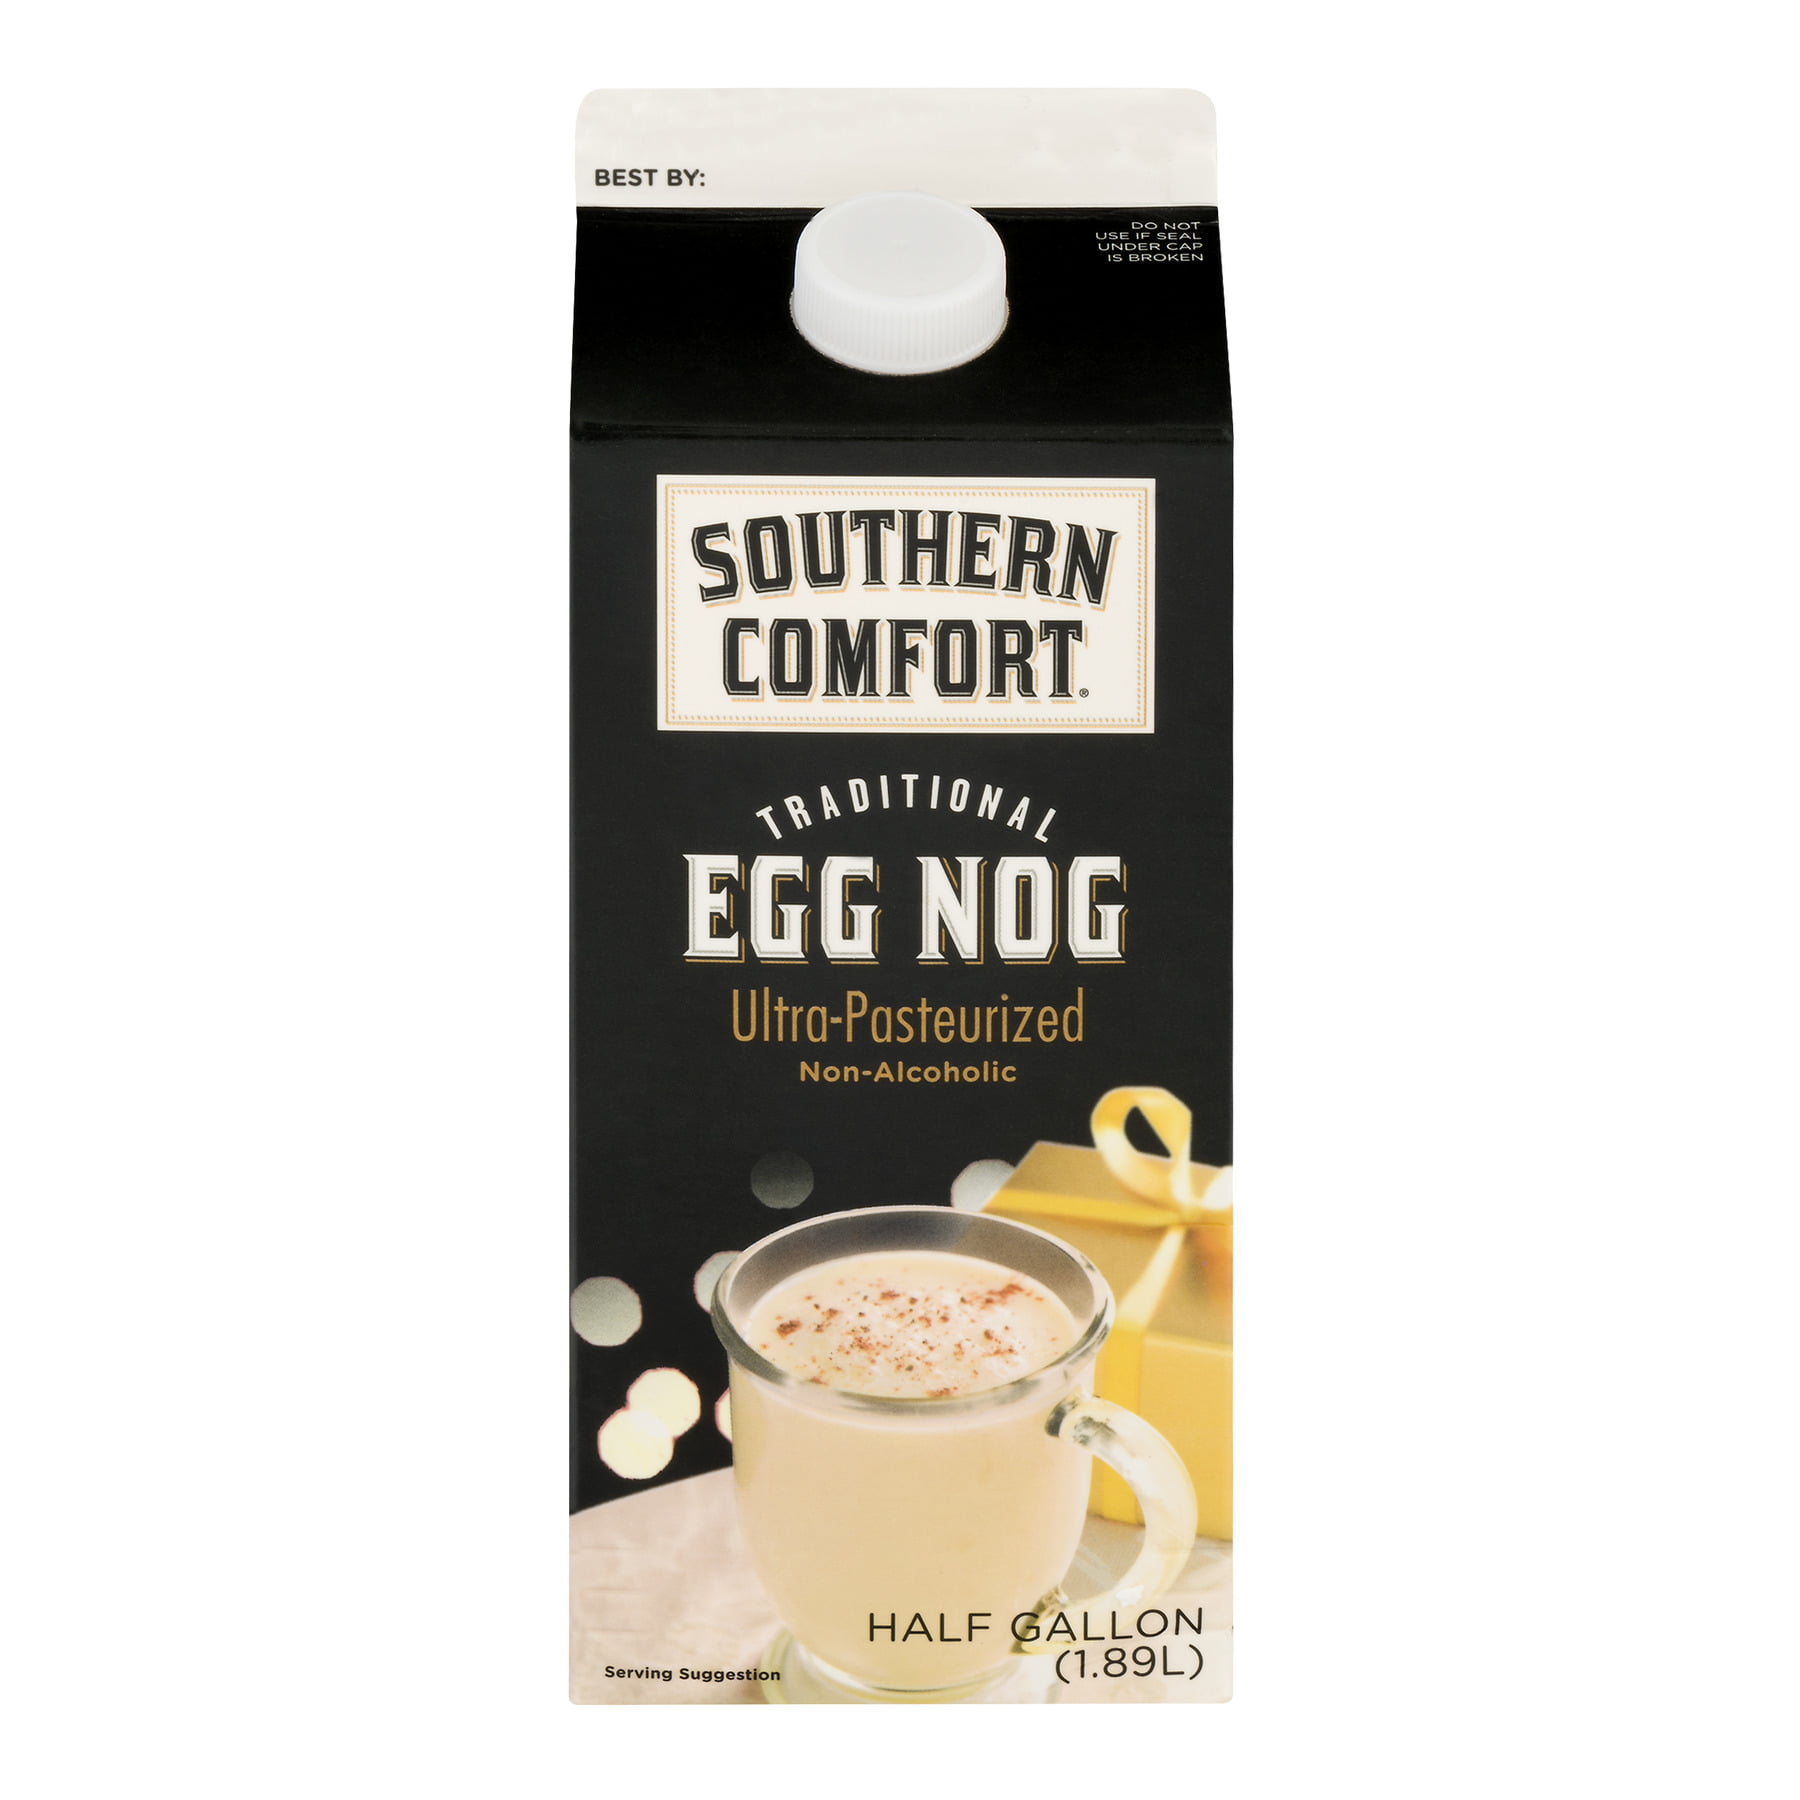 Southern Comfort UltraPasteurized Eggnog, Half Gallon.